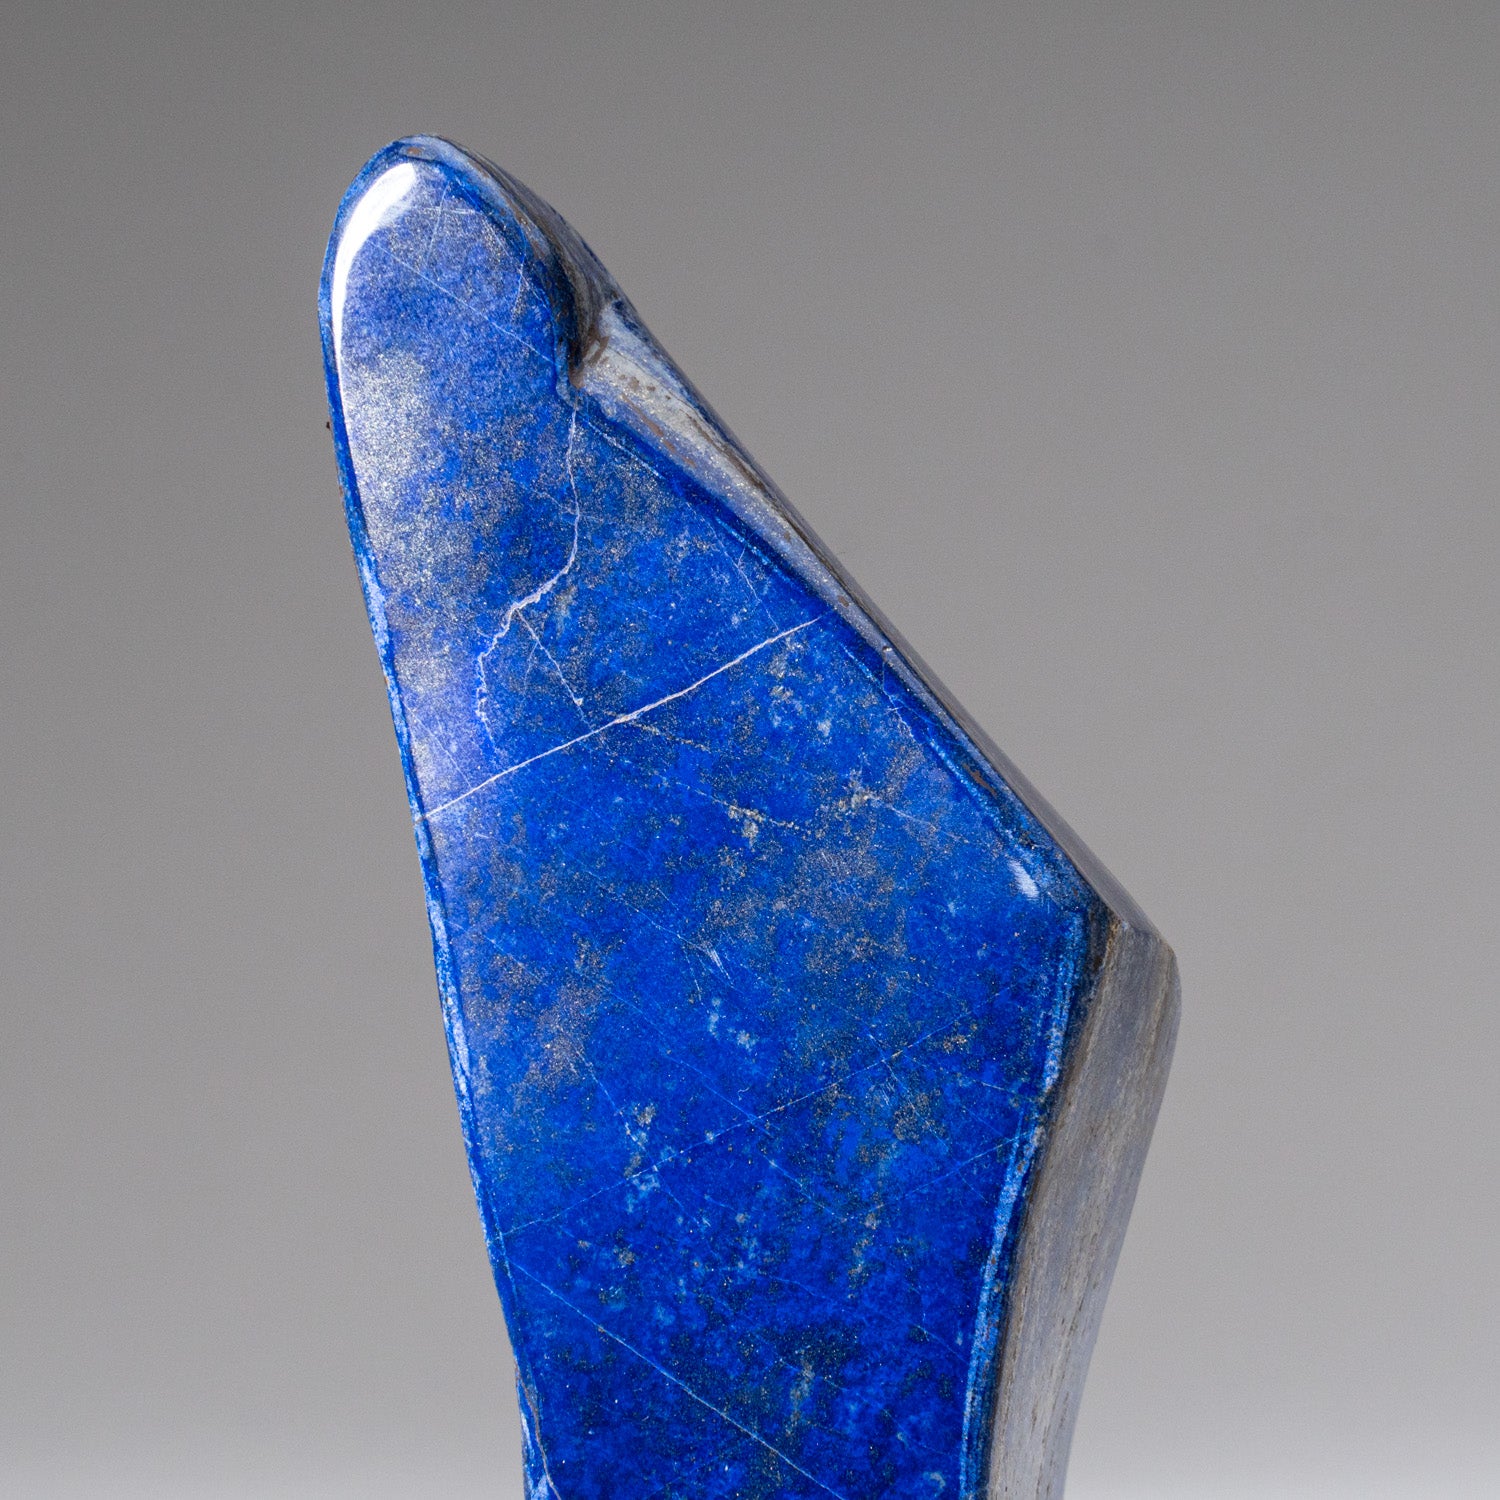 Polished Lapis Lazuli Freeform from Afghanistan (3.6 lbs)